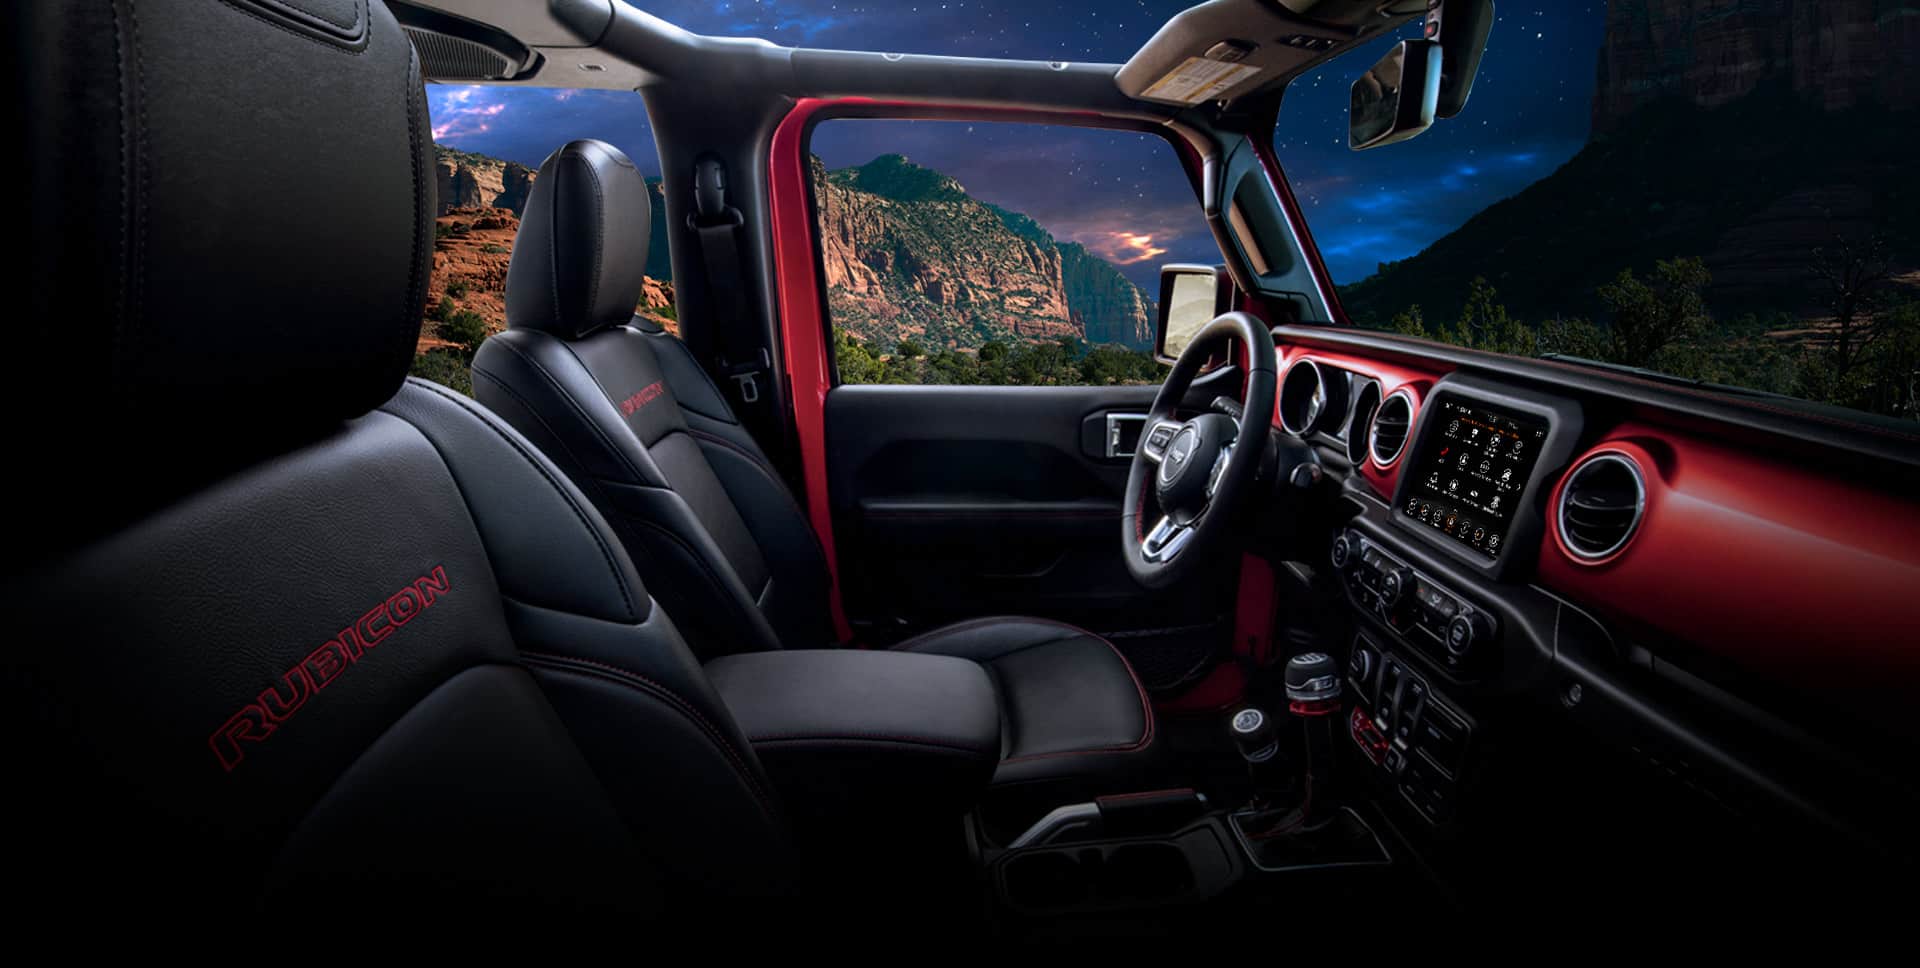 2022 Jeep® Wrangler Interior - Comfort and Adventure Awaits